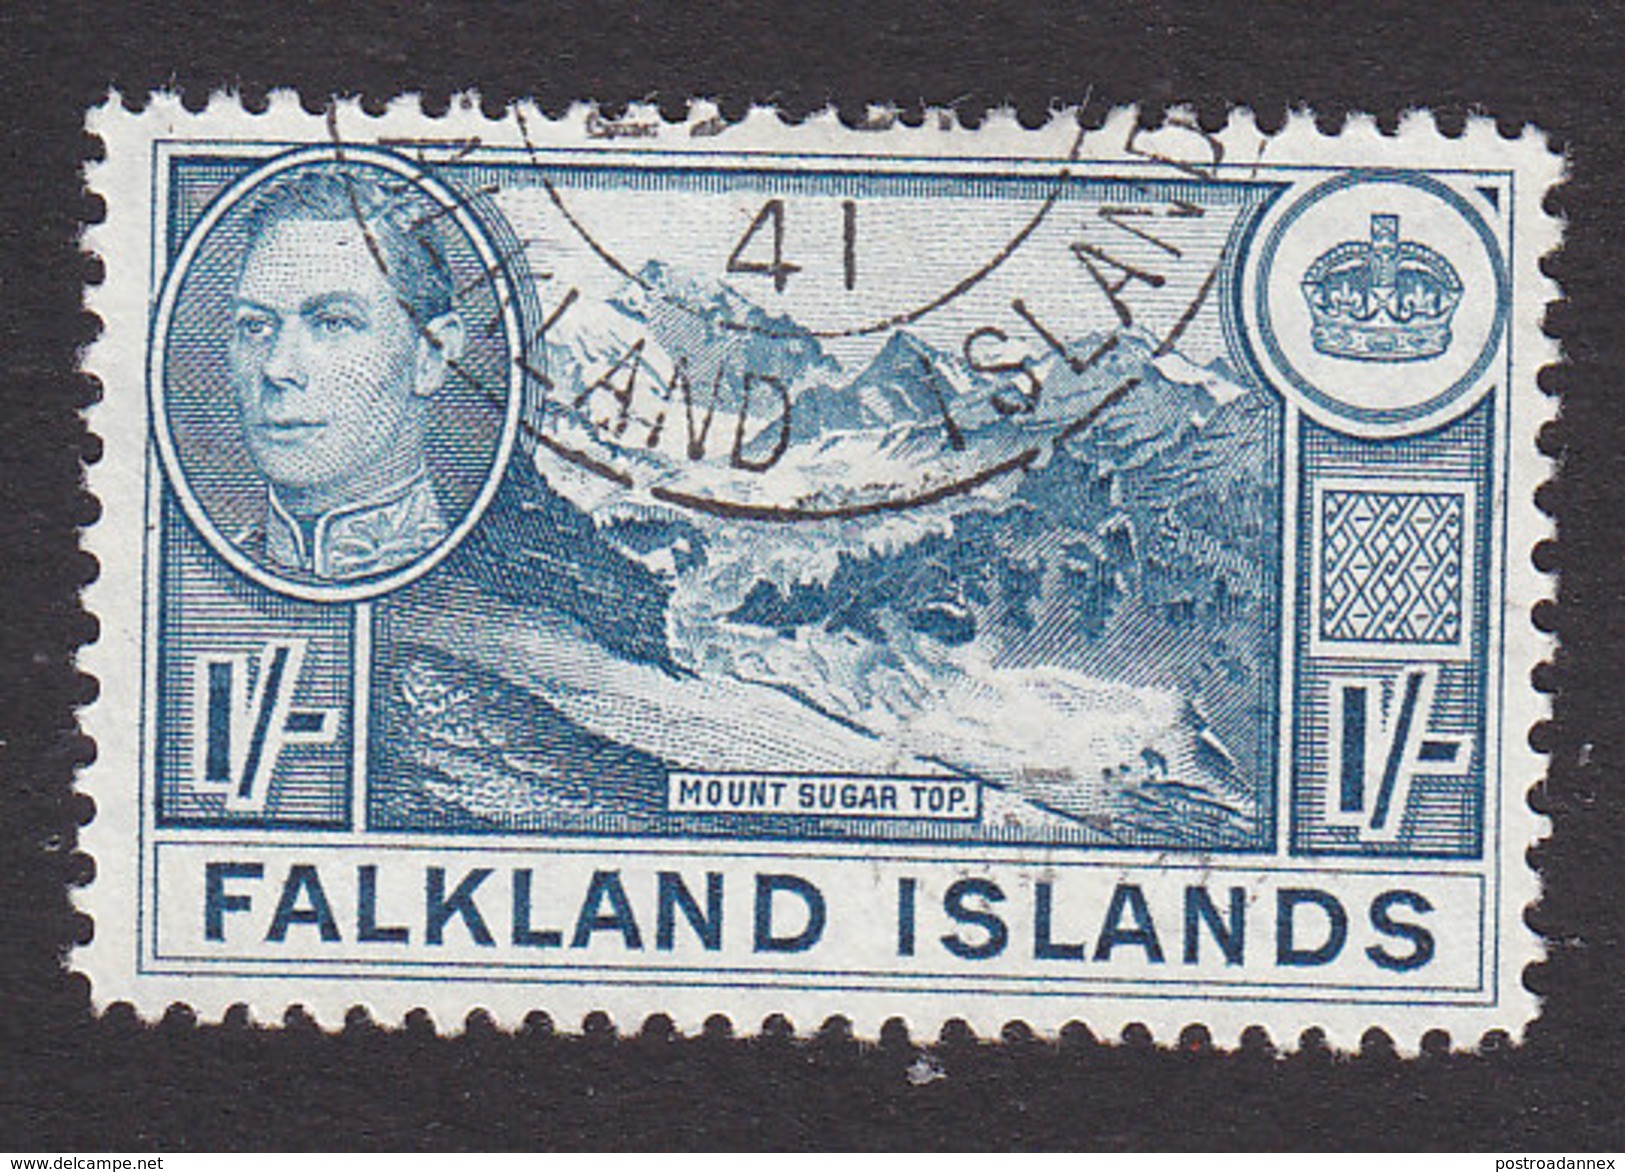 Falkland Islands, Scott #91, Used, George VI And Scenes Of Falkland Islands, Issued 1938 - Falklandinseln